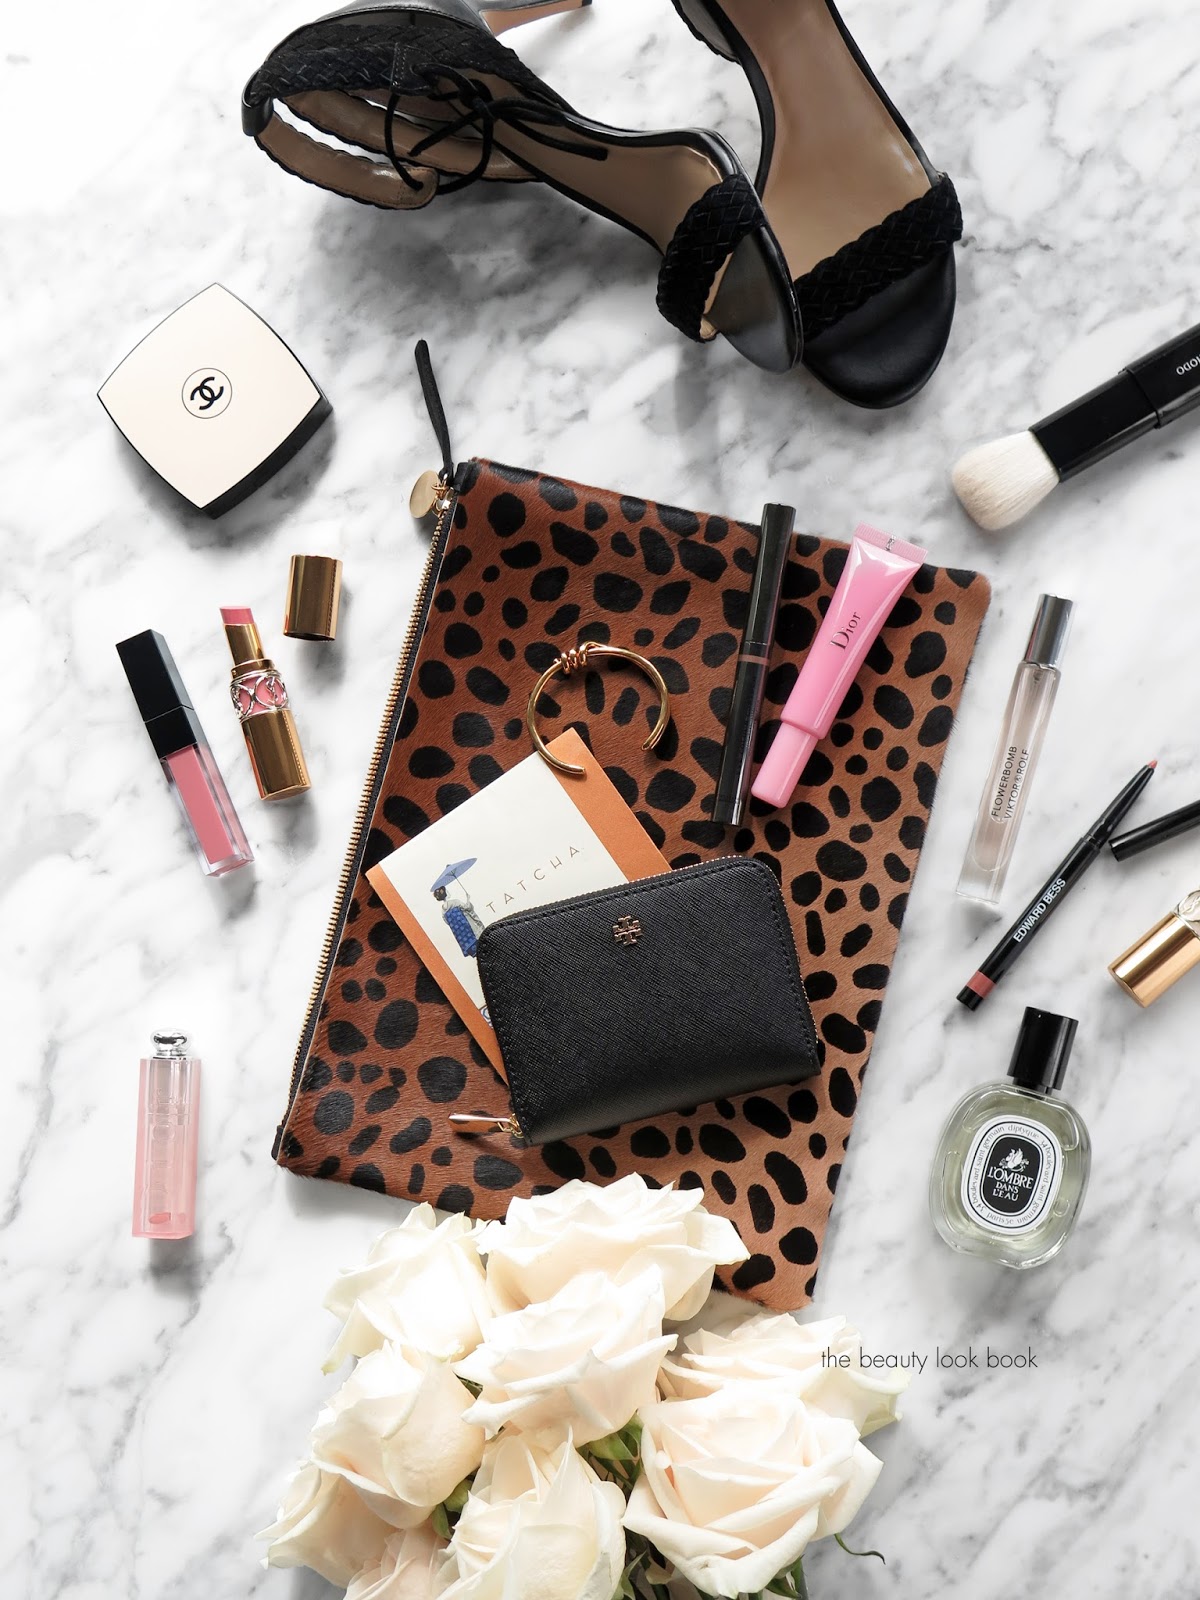 Celine Pico Belt Bag Review - The Beauty Look Book